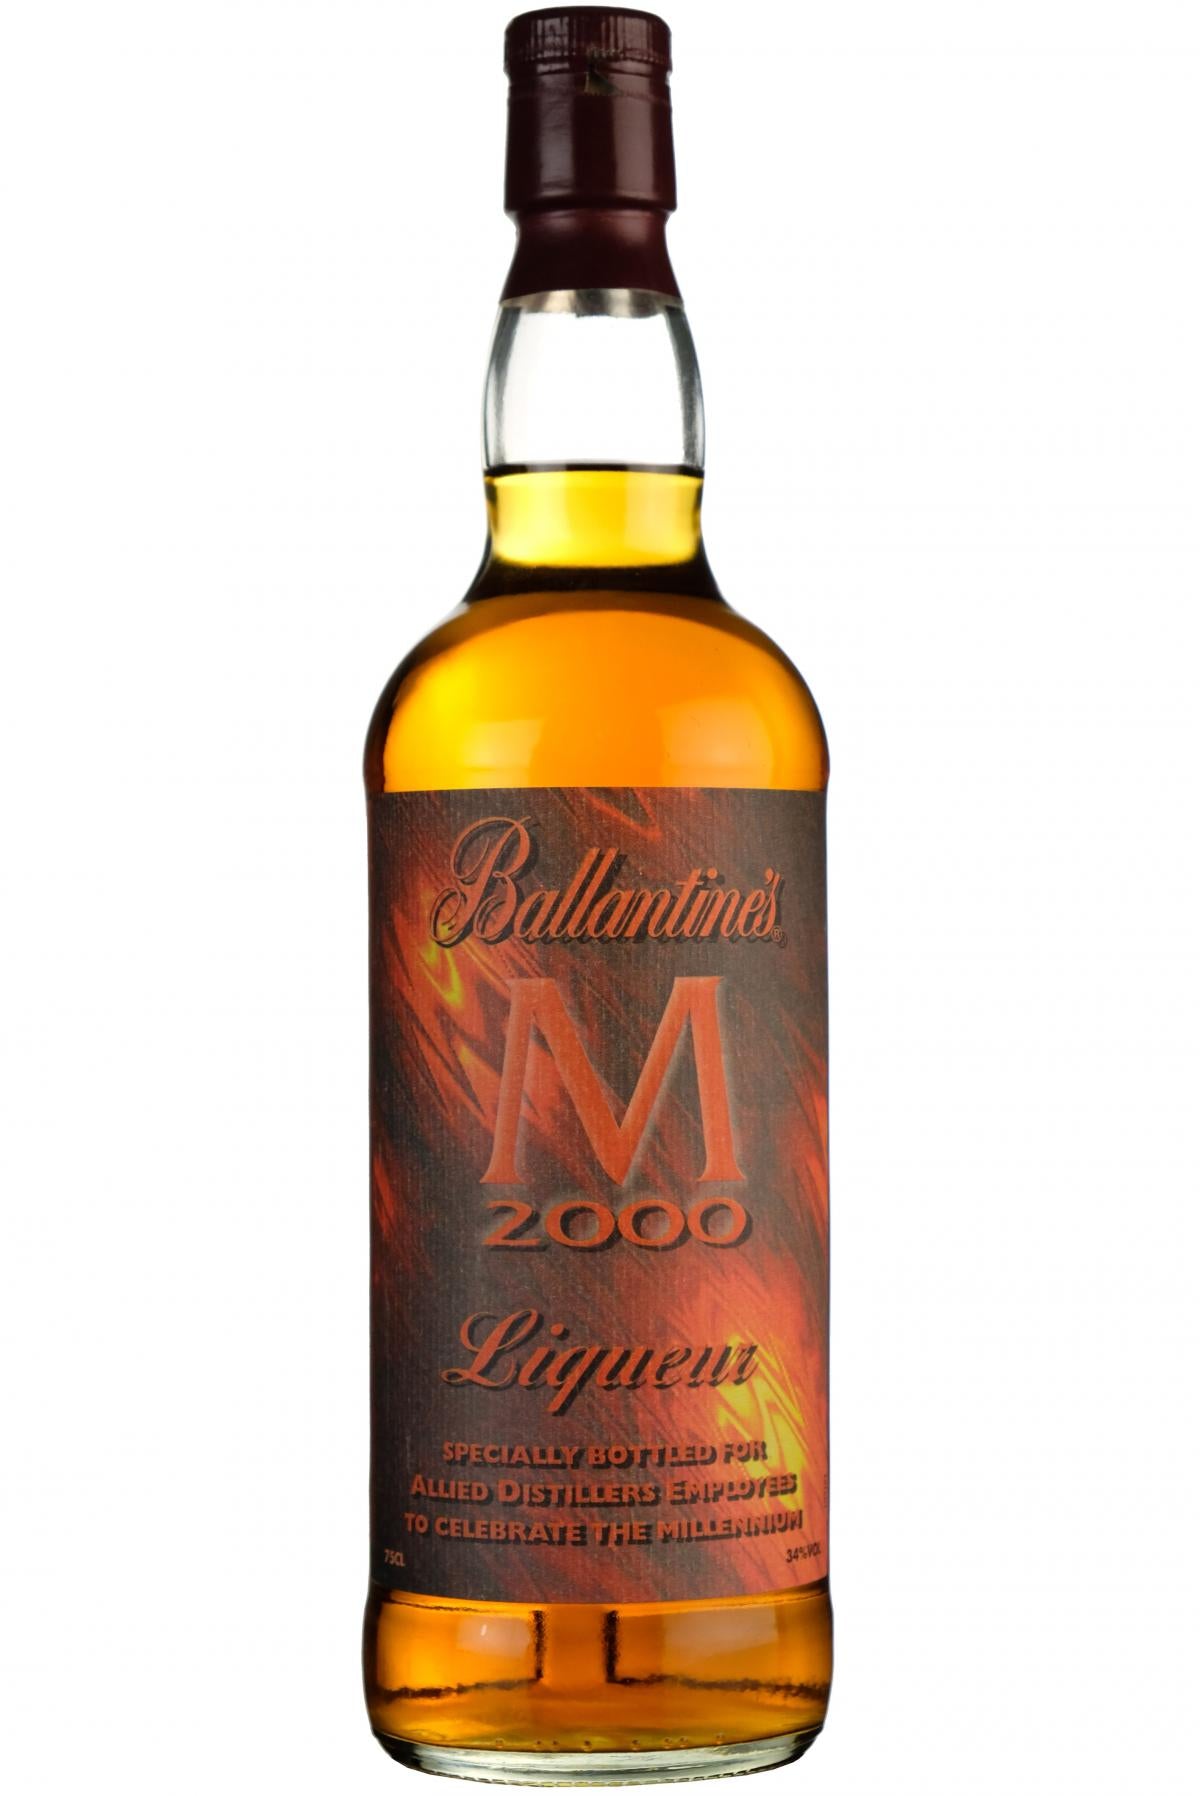 Ballantine's Millennium 2000 Liqueur